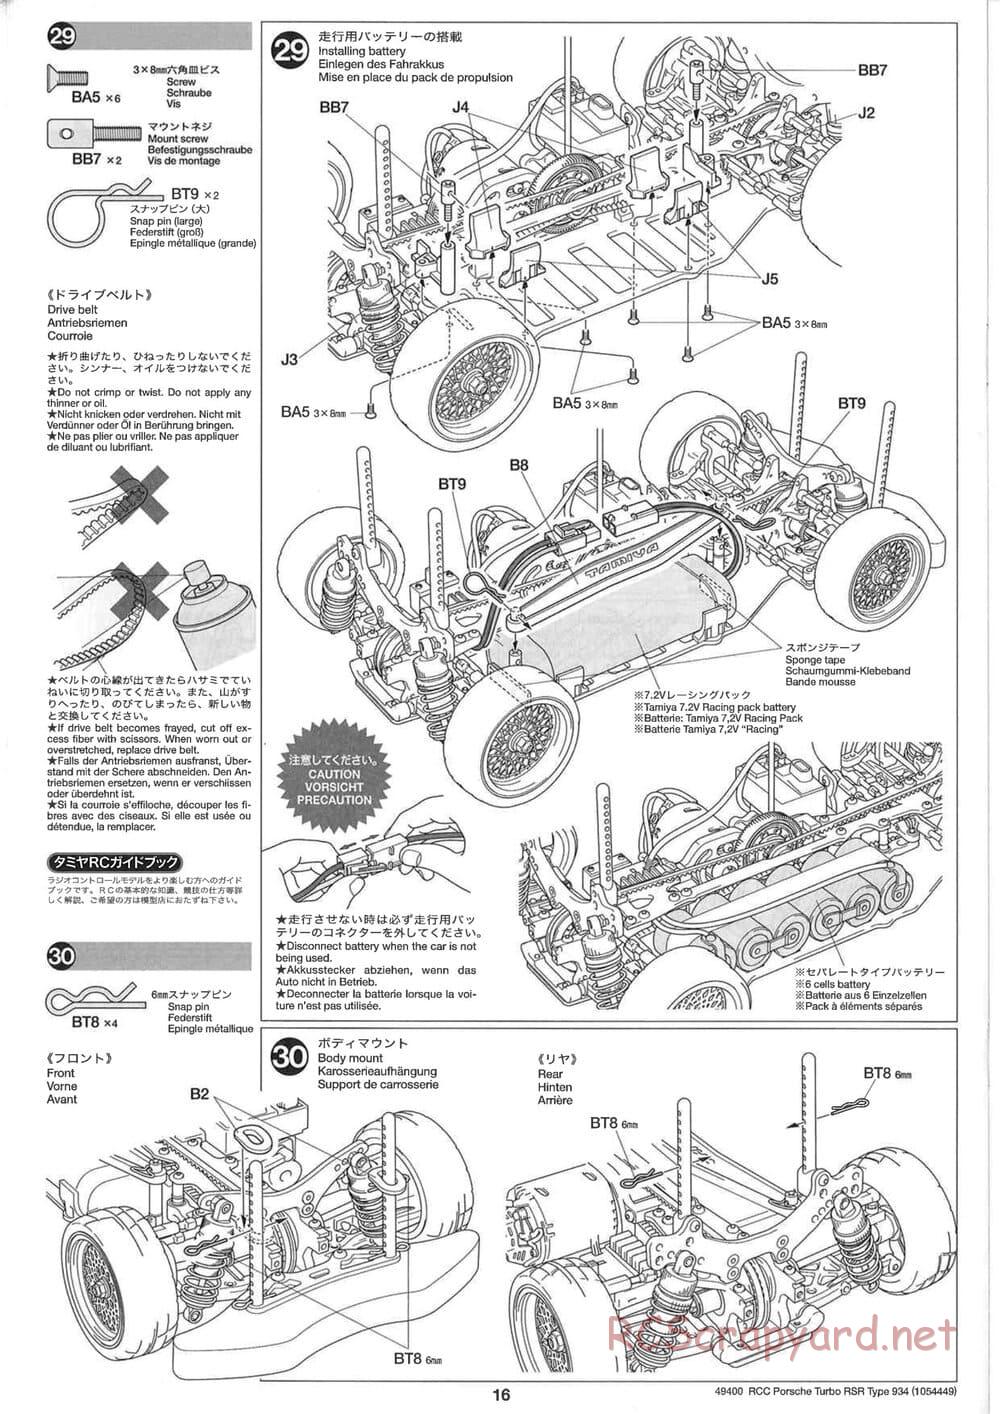 Tamiya - Porsche Turbo RSR Type 934 - TA05 Chassis - Manual - Page 16